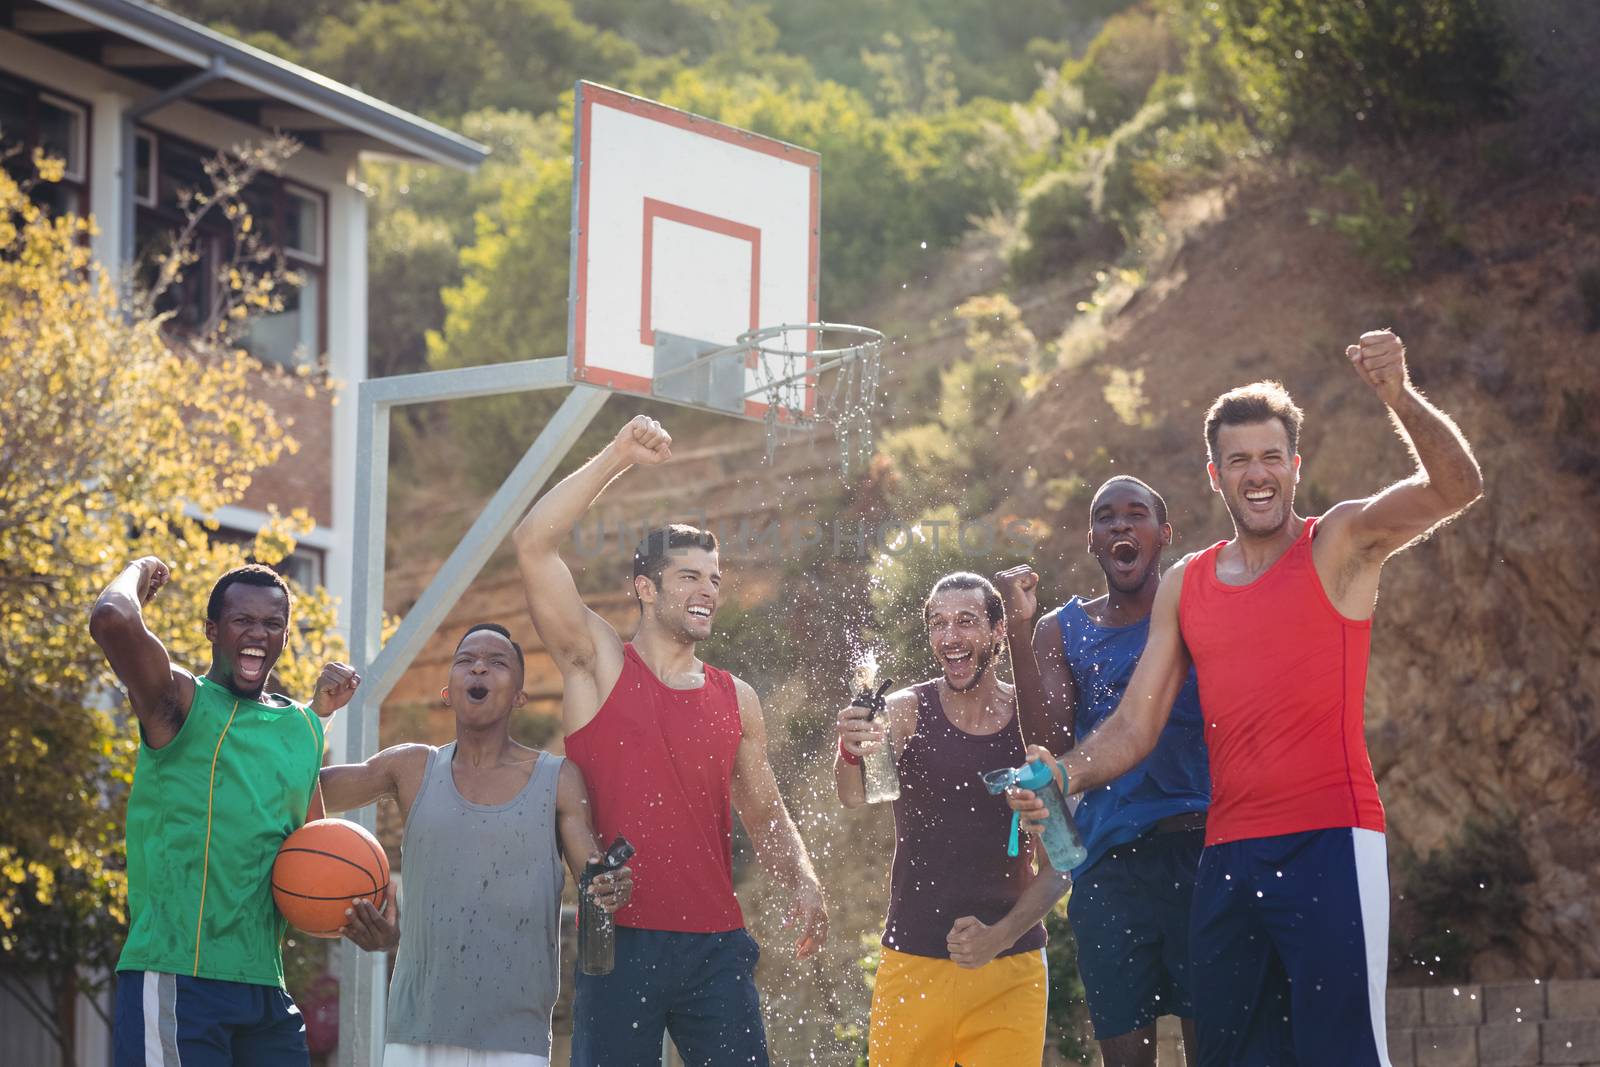 Basketball players celebrating by splashing water on each other by Wavebreakmedia